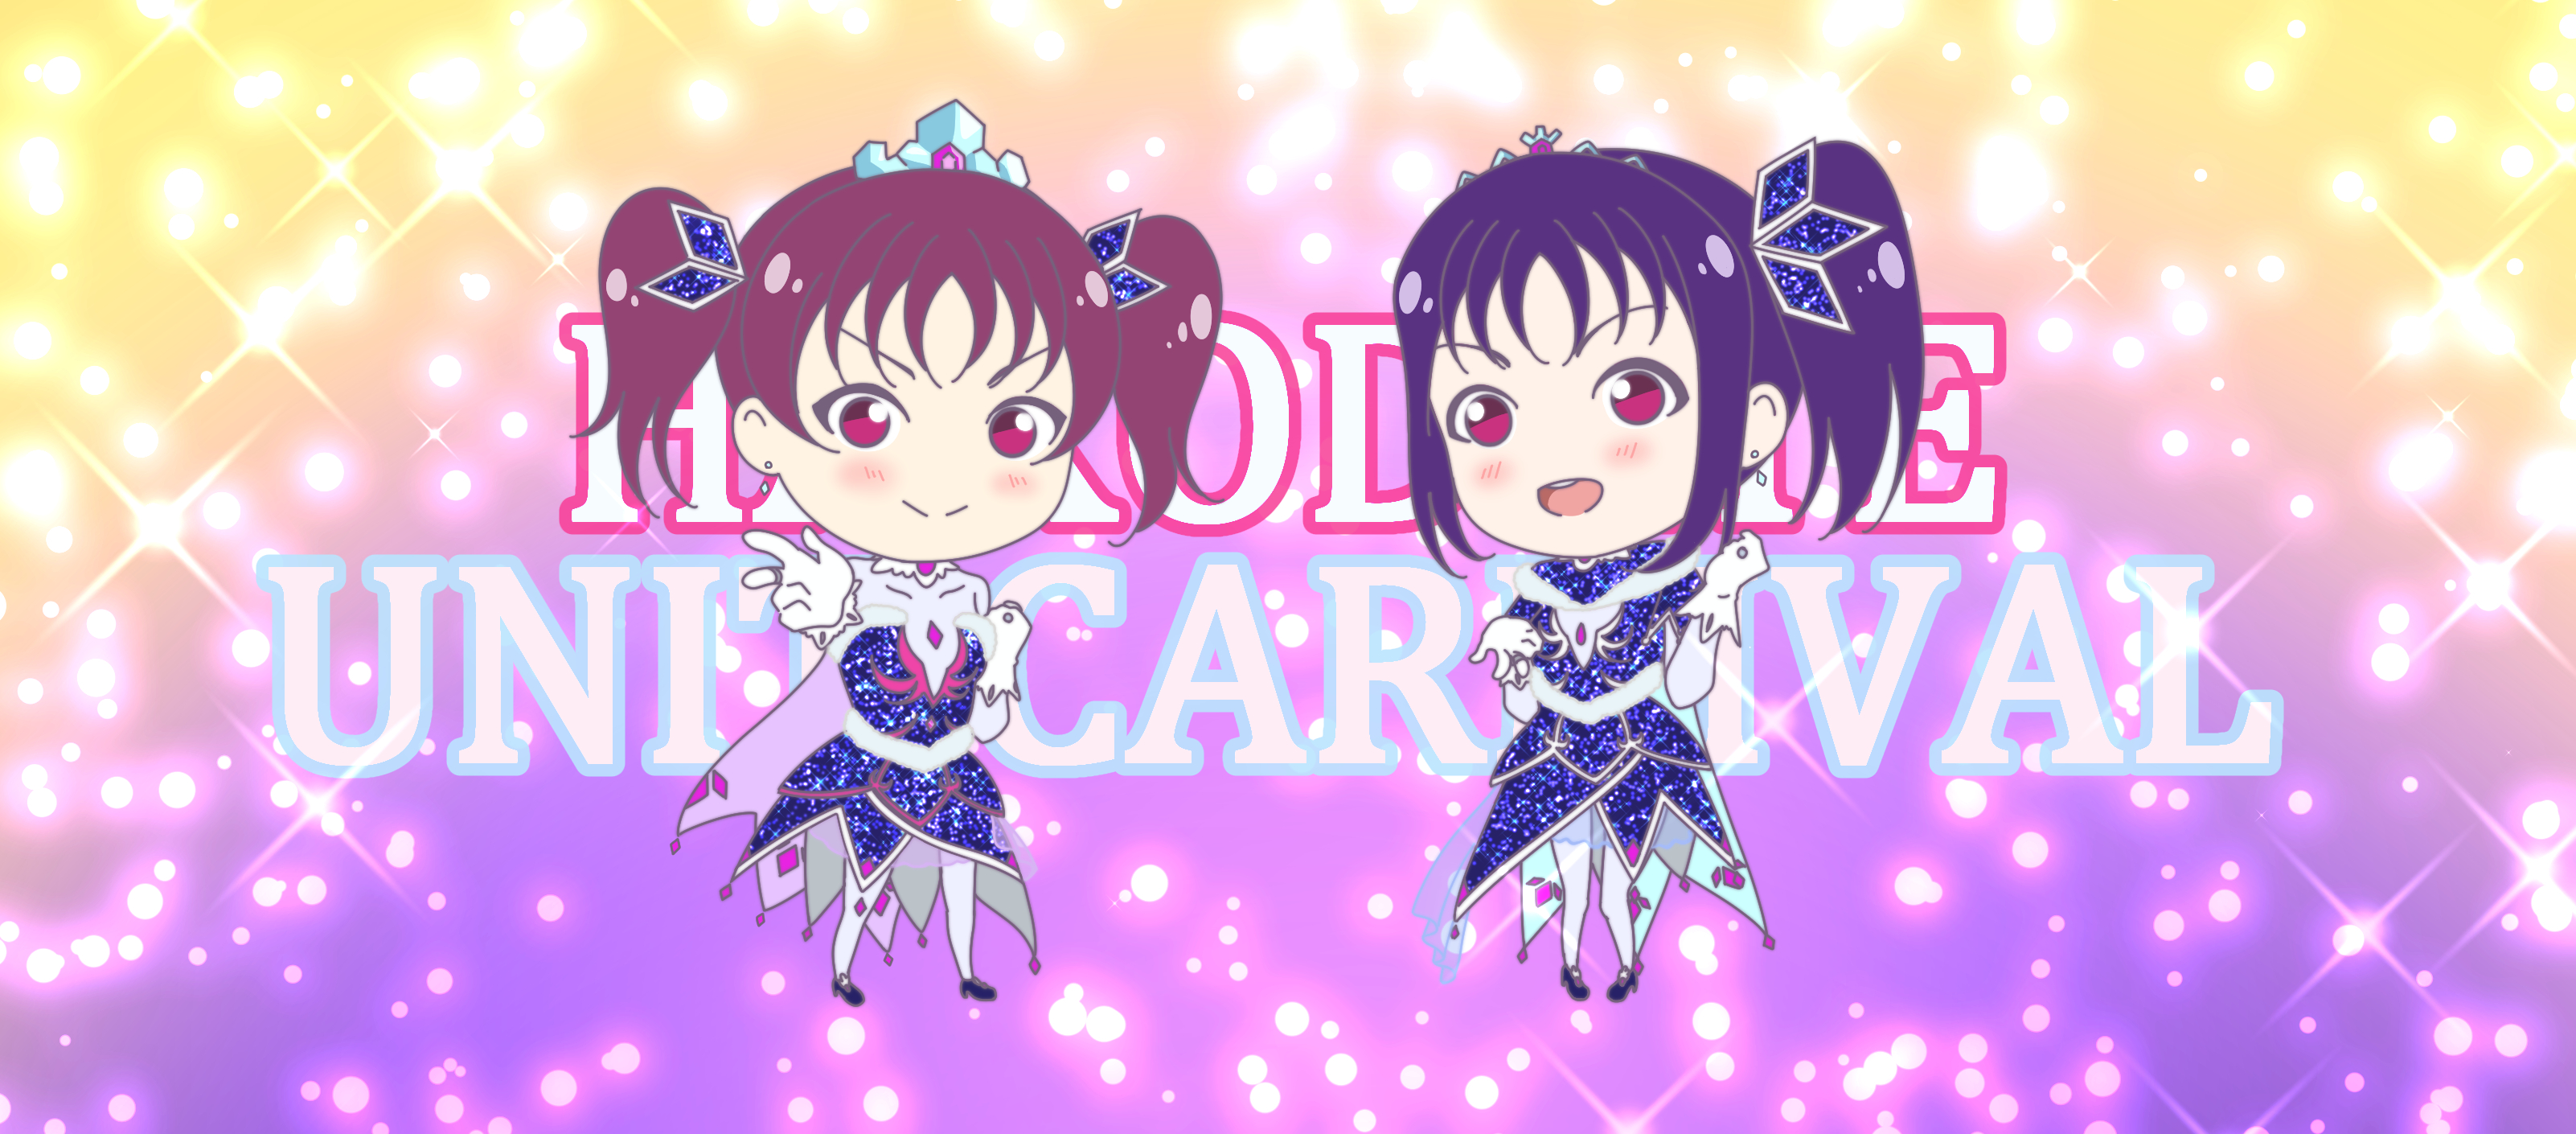 Anime Love Live! Sunshine!! HD Wallpaper | Background Image